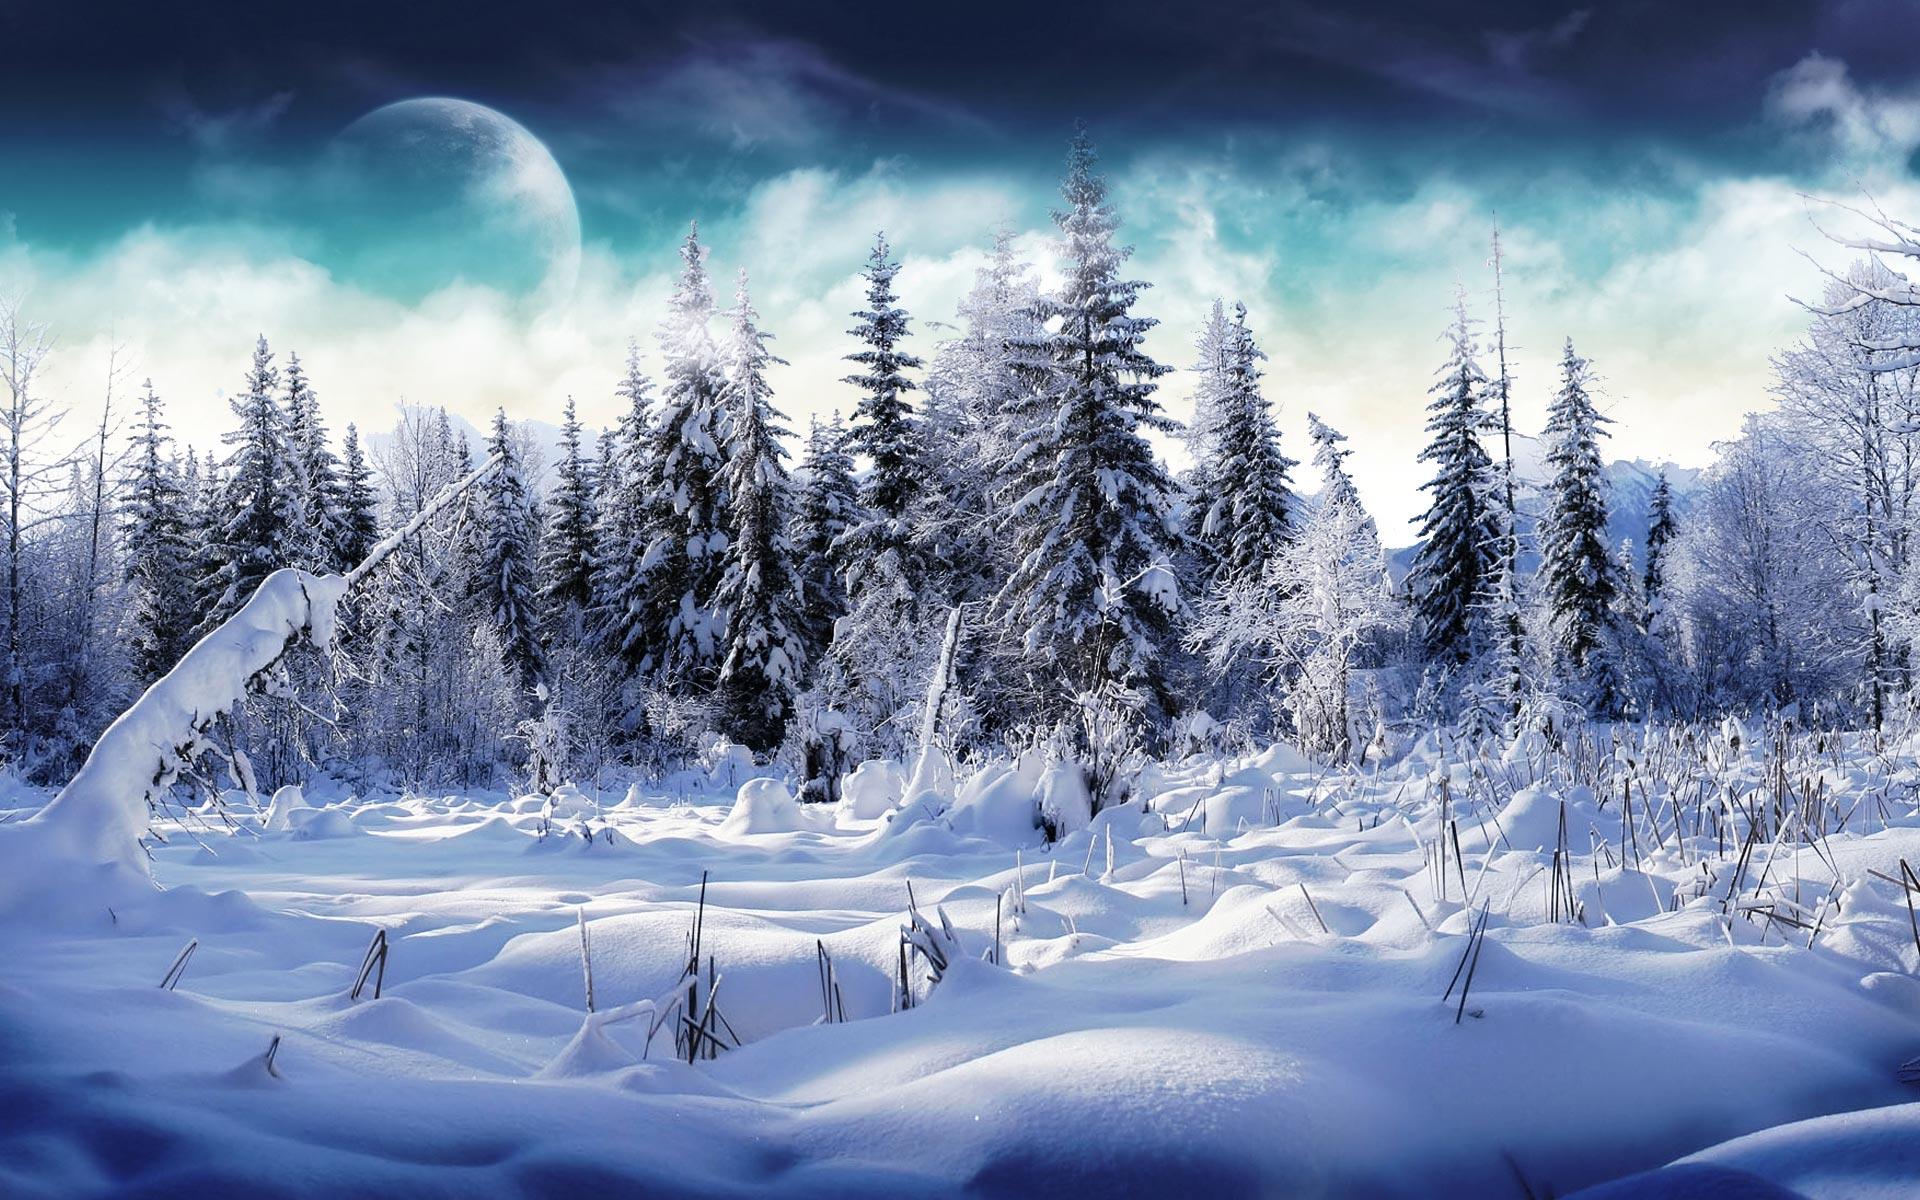 Winter Forest HD Wallpaper. Winter Forest Photo